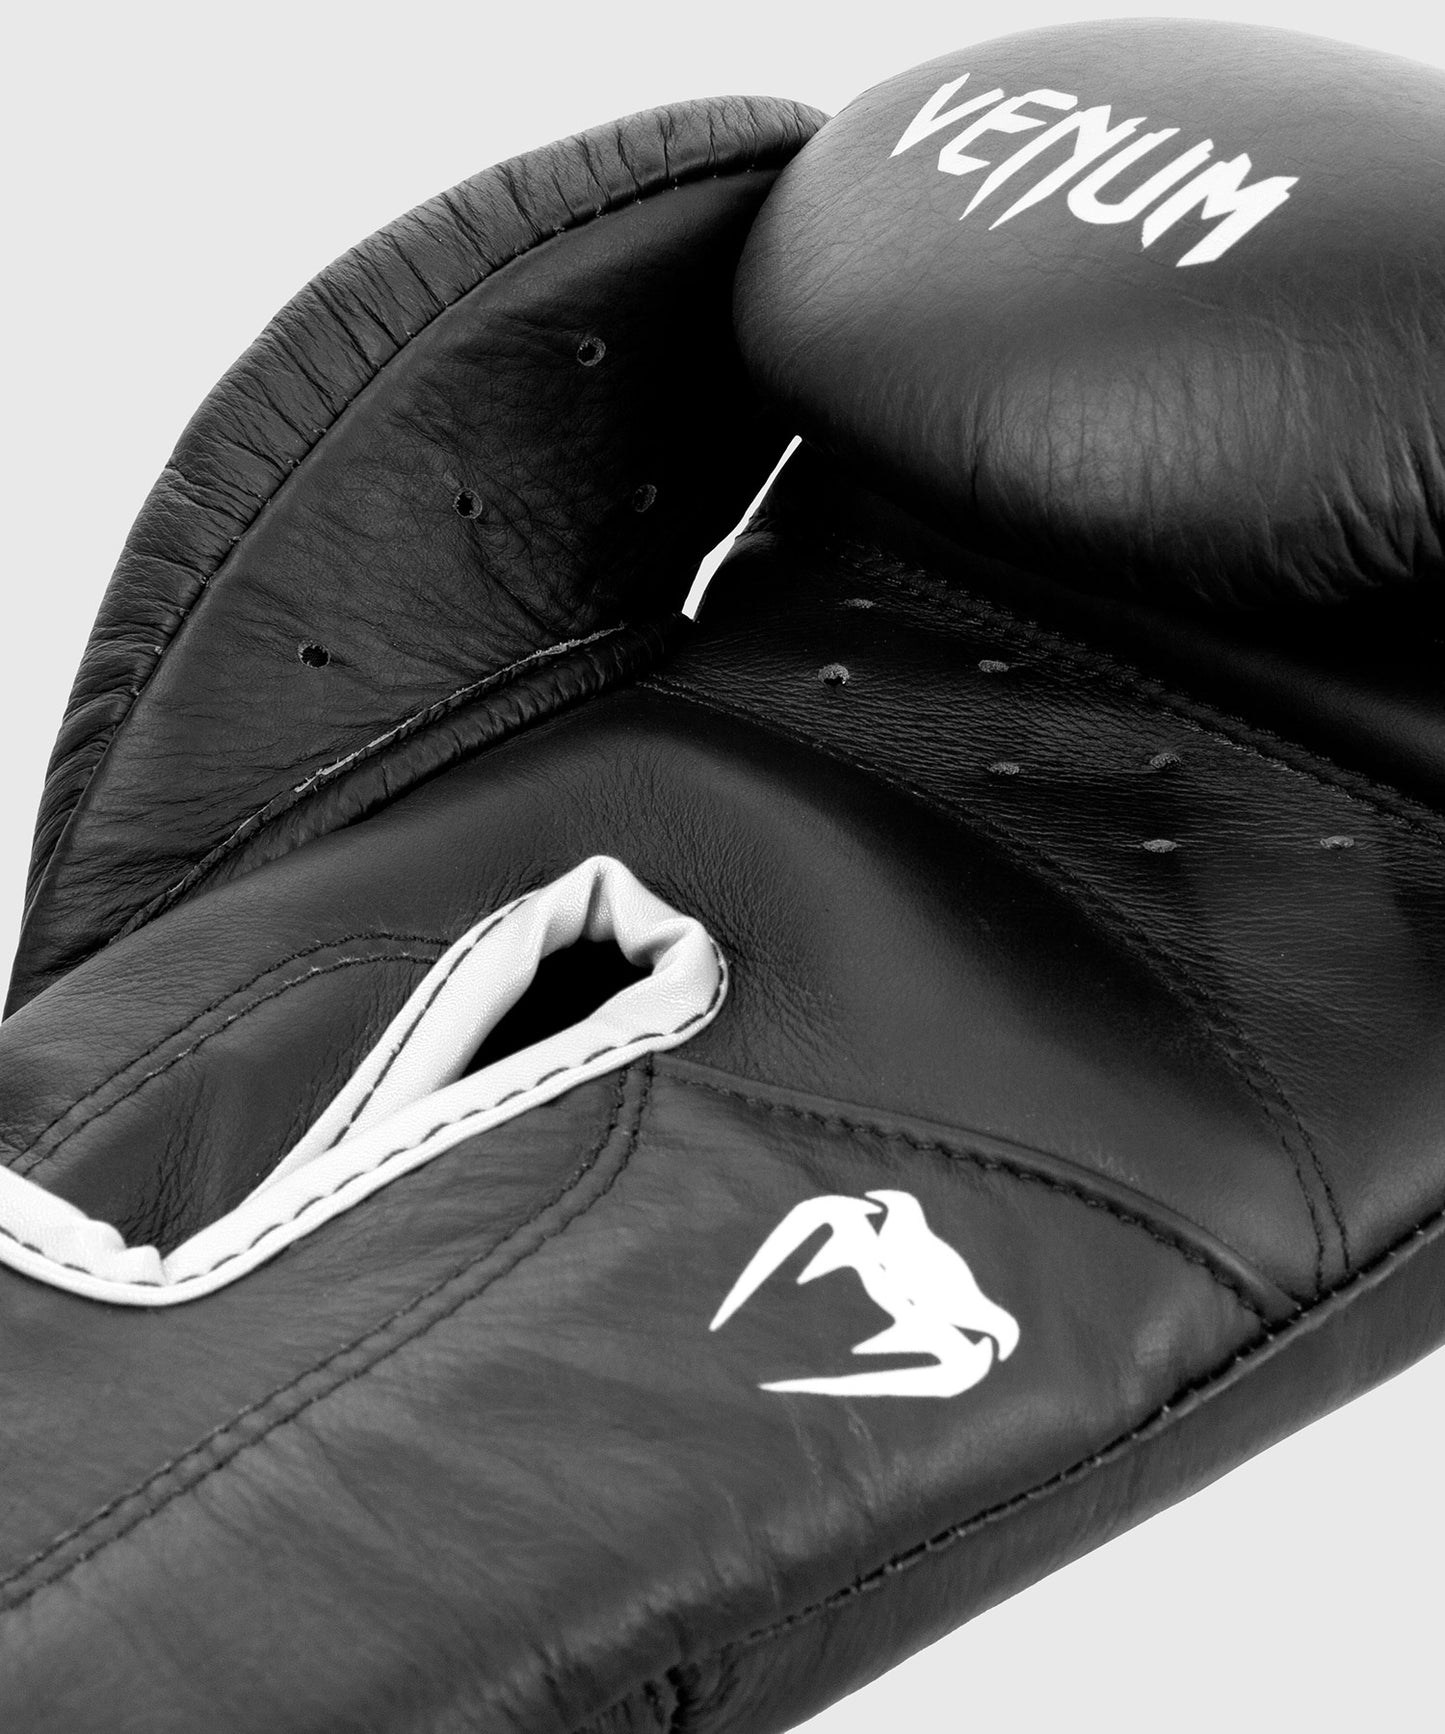 Venum Giant 2.0 Pro Boxing Gloves Velcro